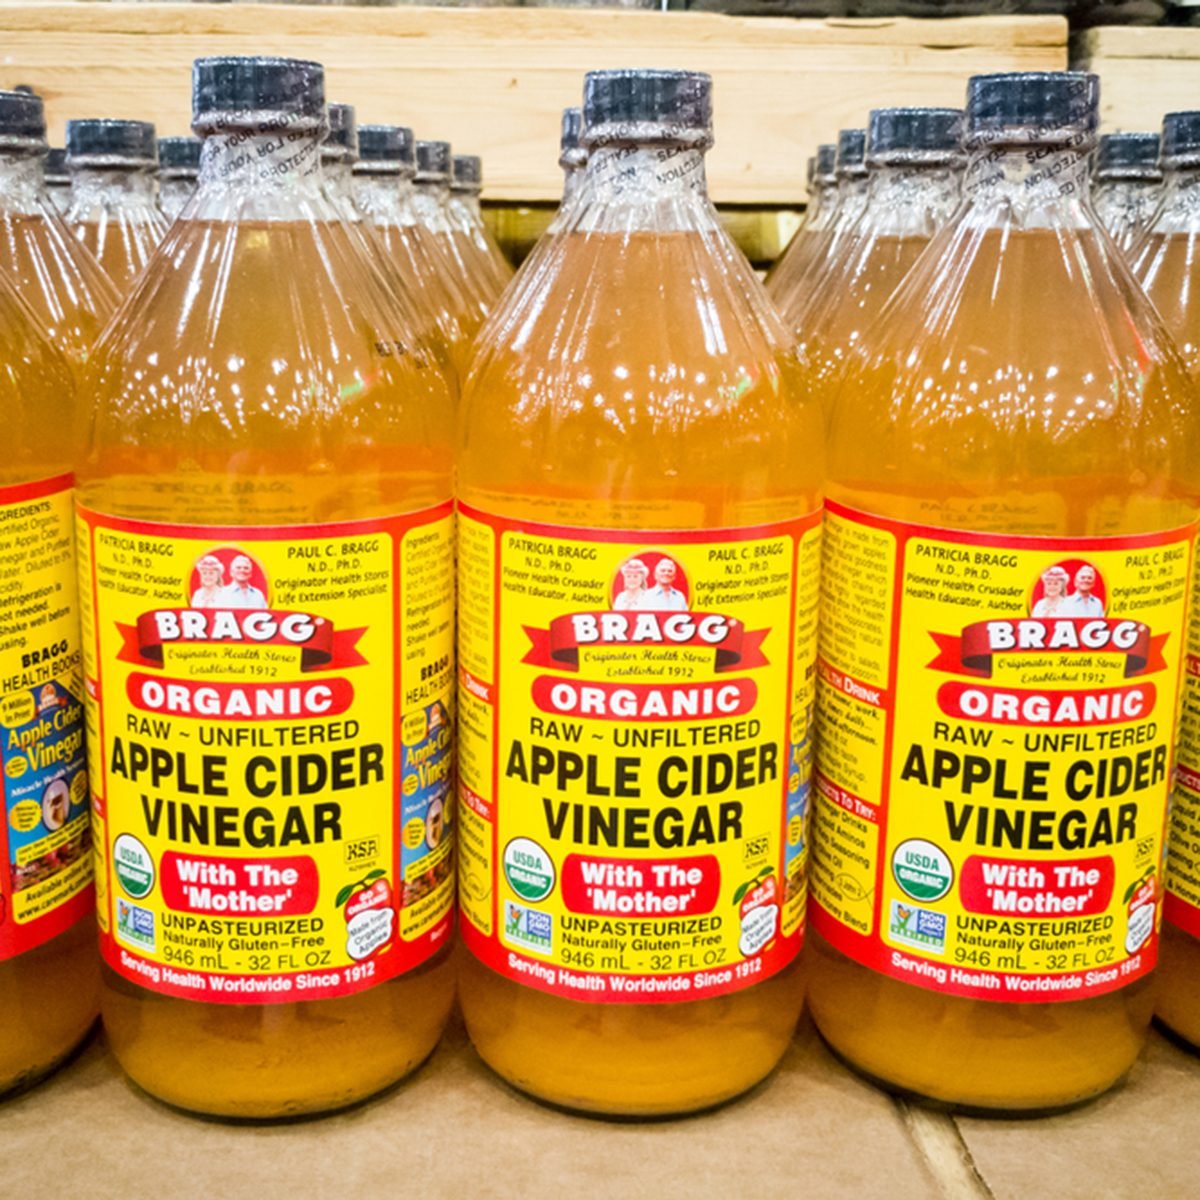 10 Ways To Use Apple Cider Vinegar, Clean Tile Floors With Apple Cider Vinegar